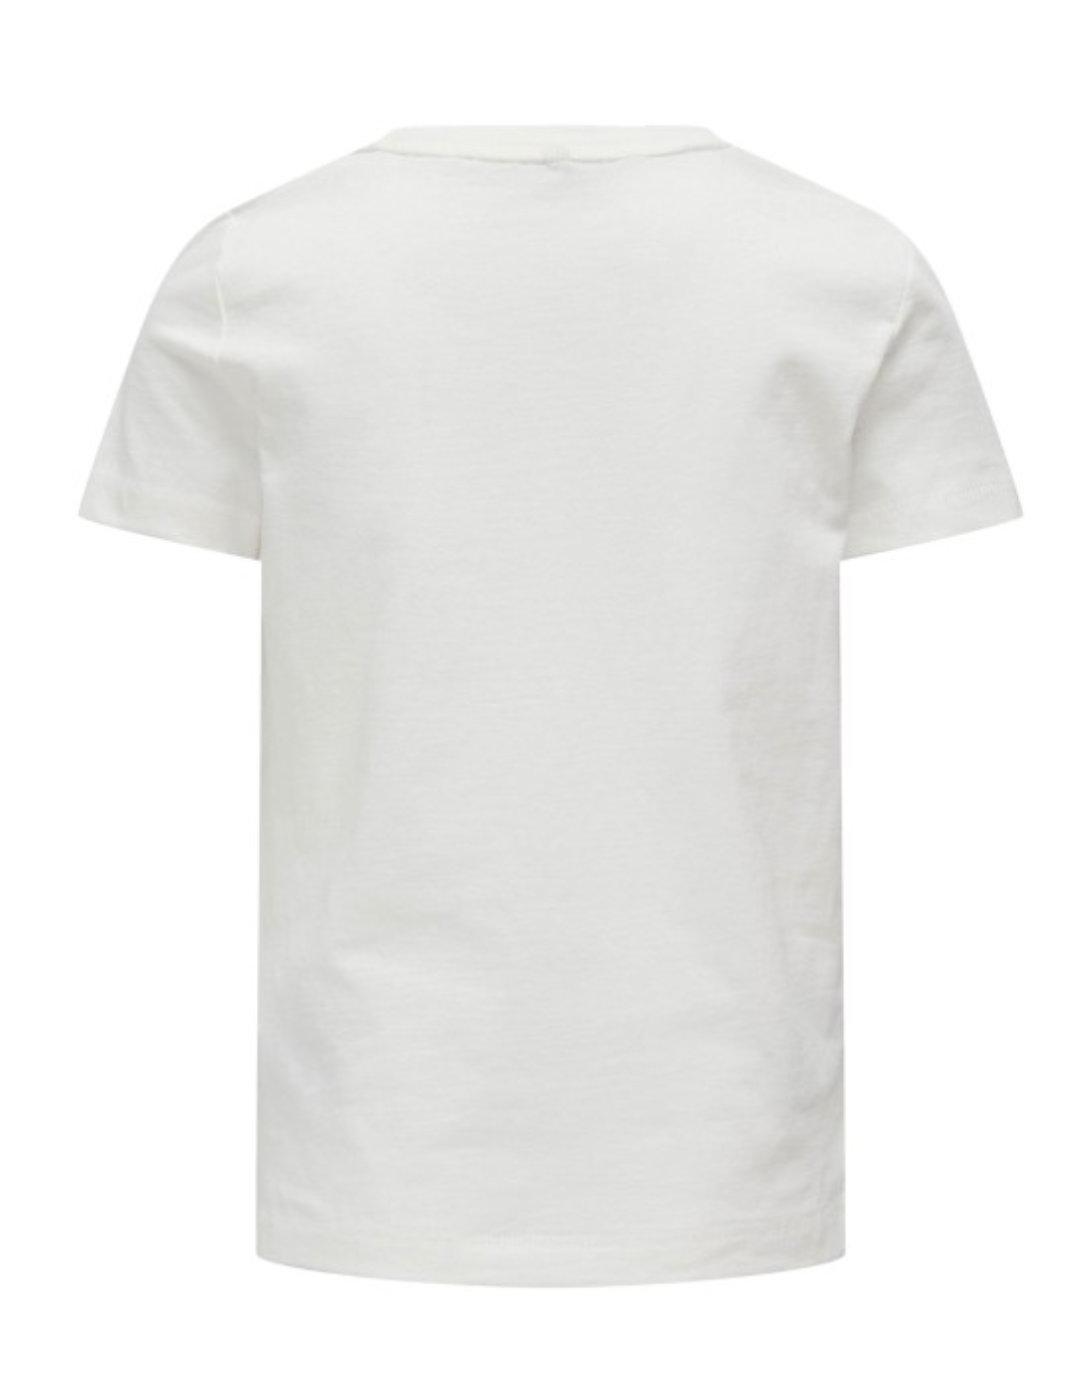 Camiseta Only Kids  Gloovi blanca manga corta para niña